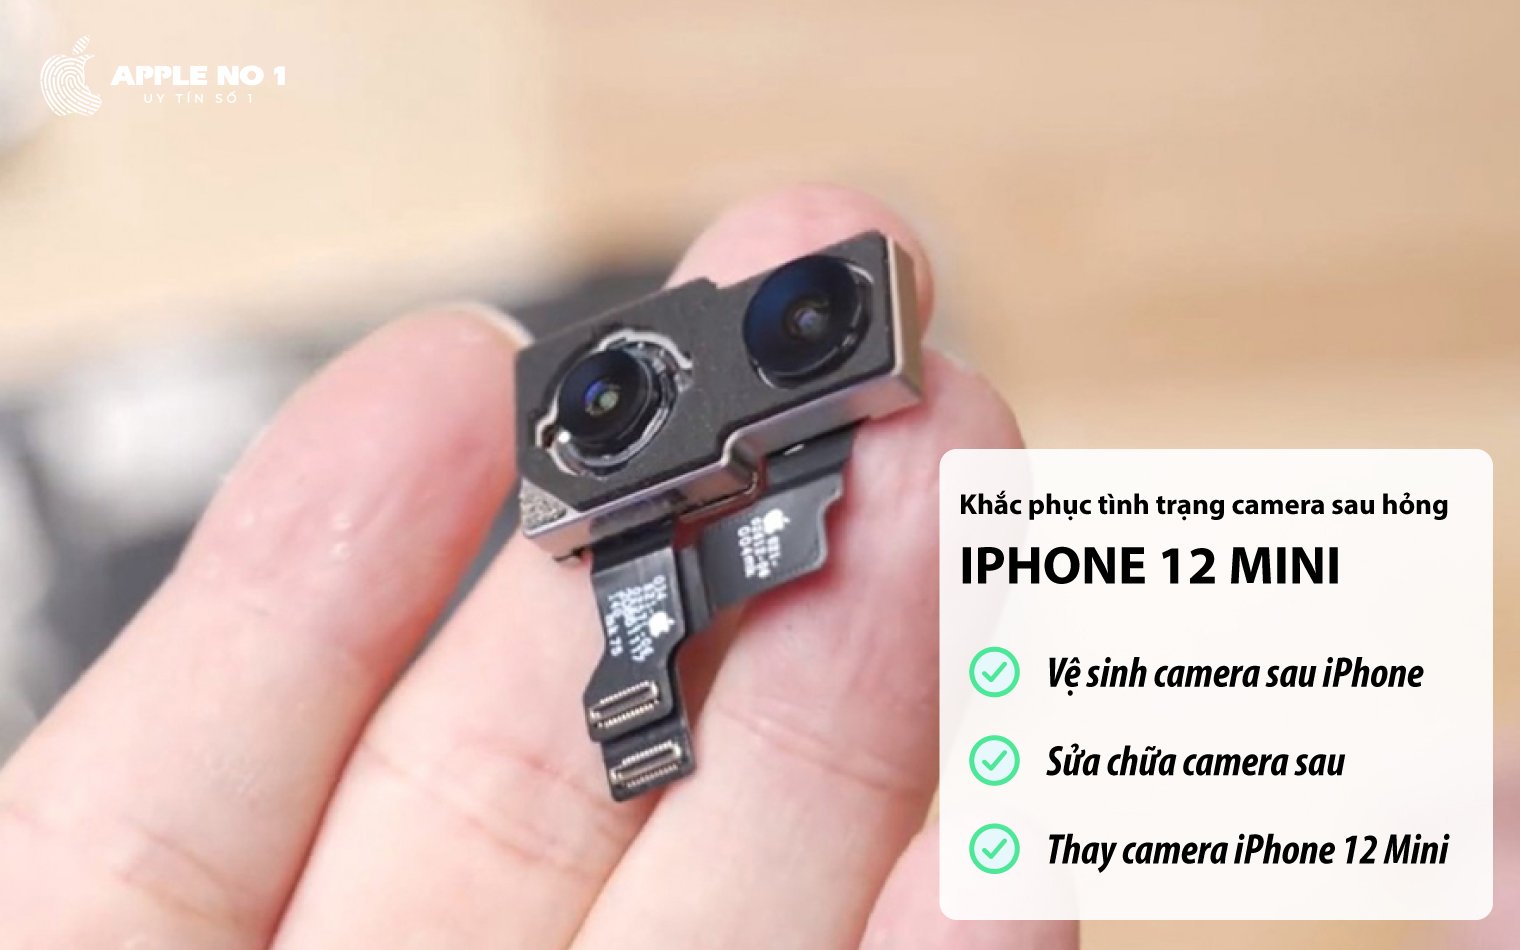 khac phuc camera sau iPhone 12 mini bi chap chay